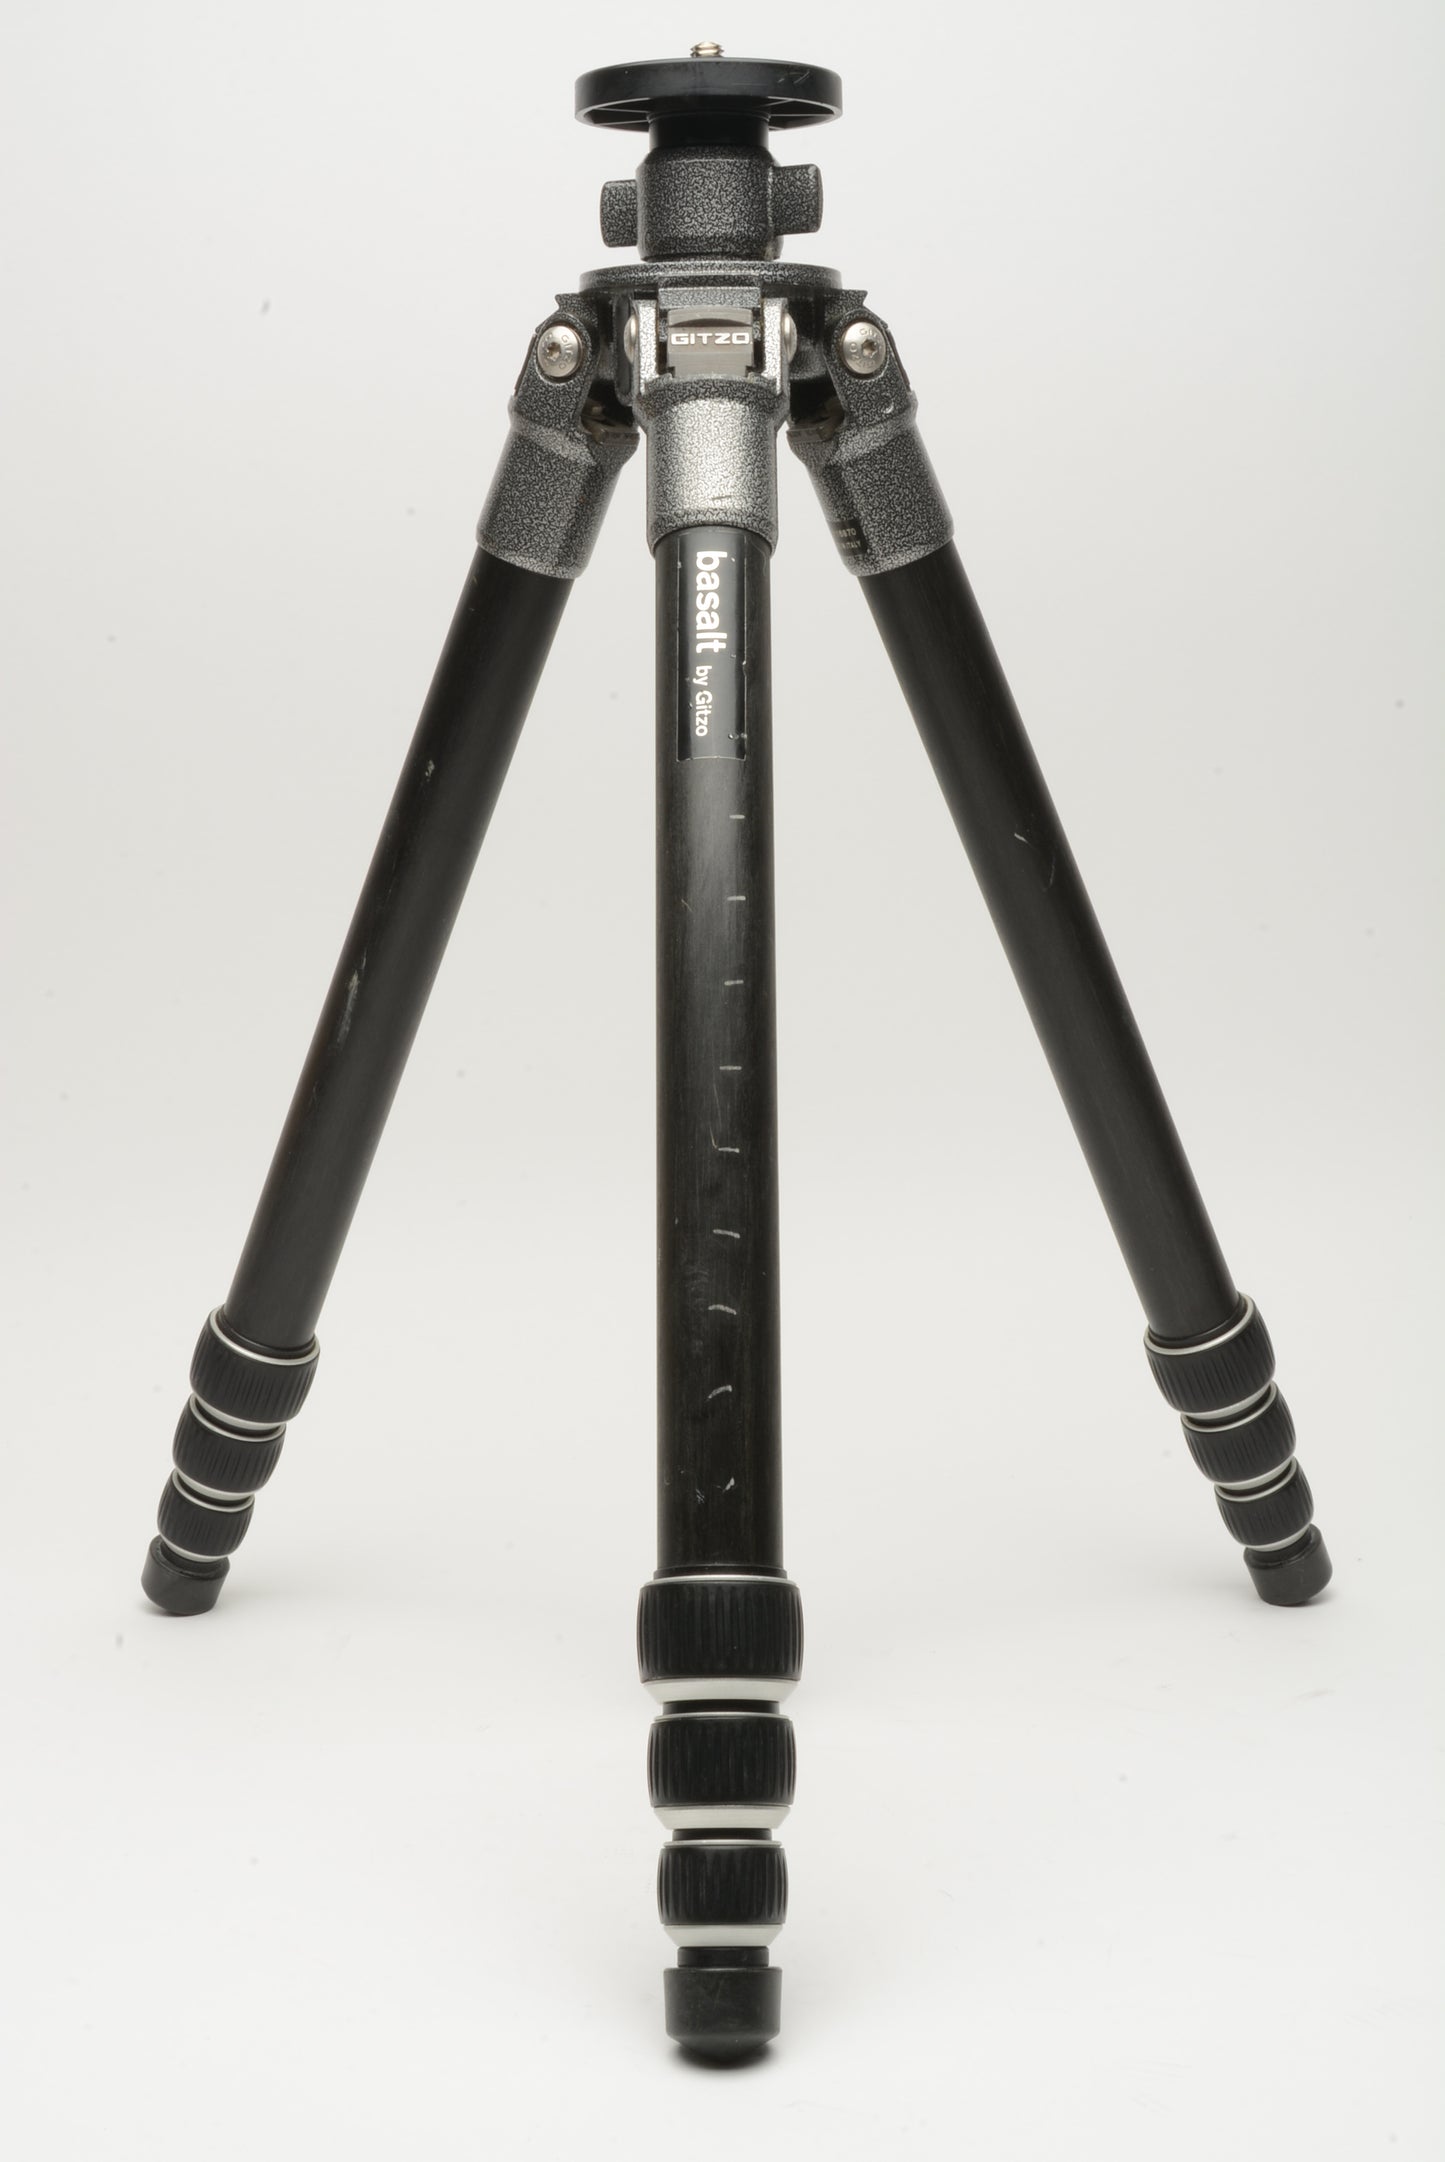 Gitzo G-1298 Reporter Basalt Tripod Legs - Supports 12.1 lb, Nice & Clean